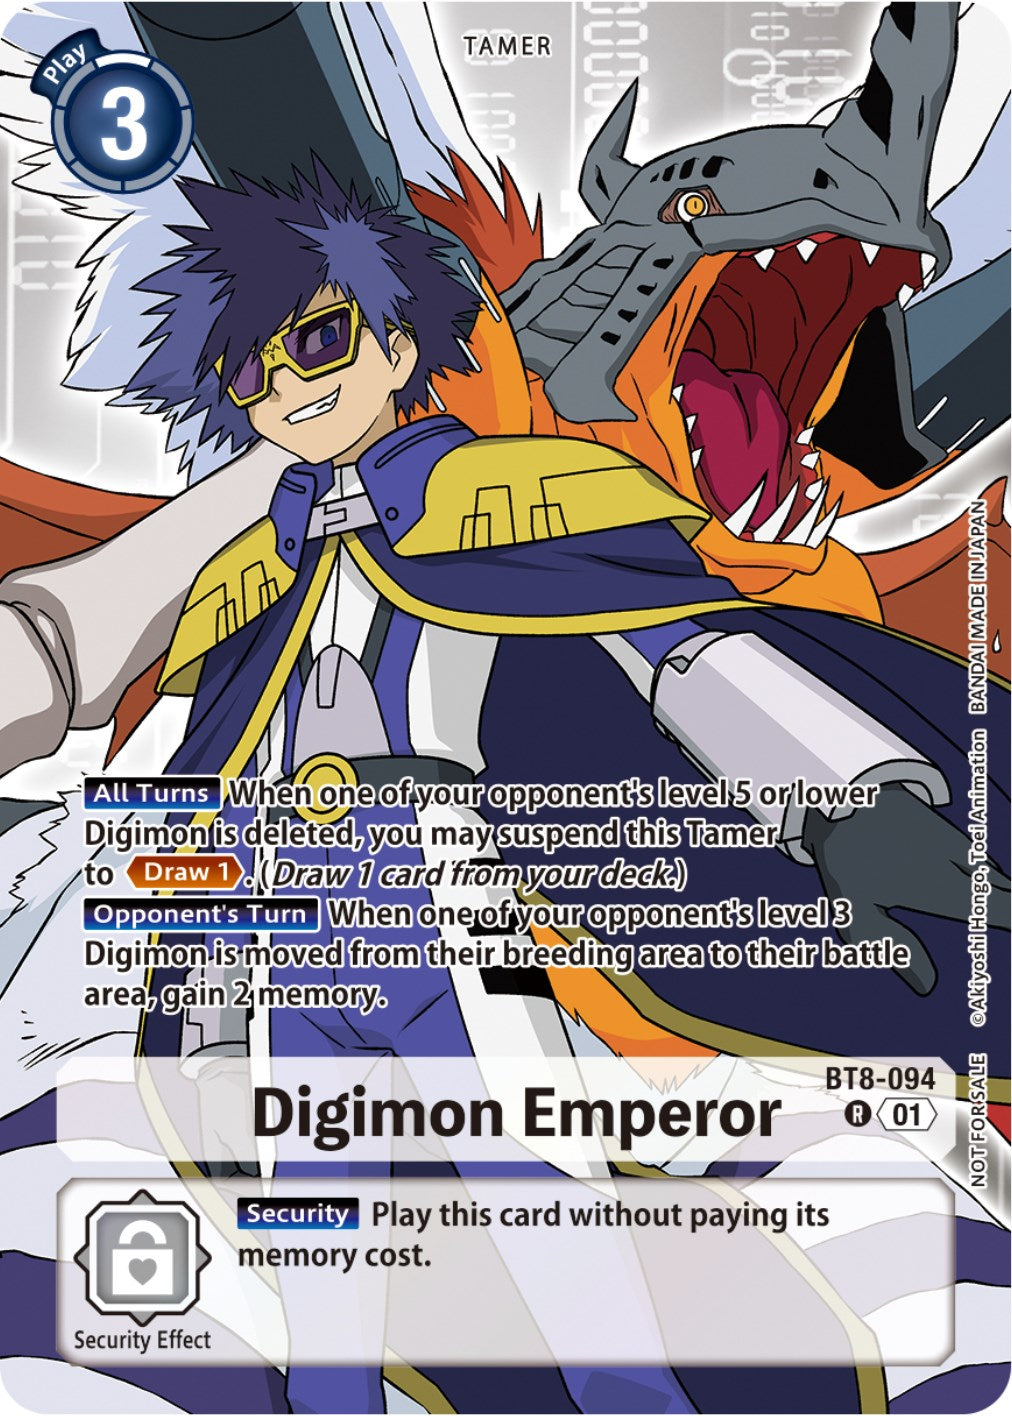 Digimon Emperor [BT8-094] (Tamer Party Pack -The Beginning-) [New Awakening] | Black Swamp Games